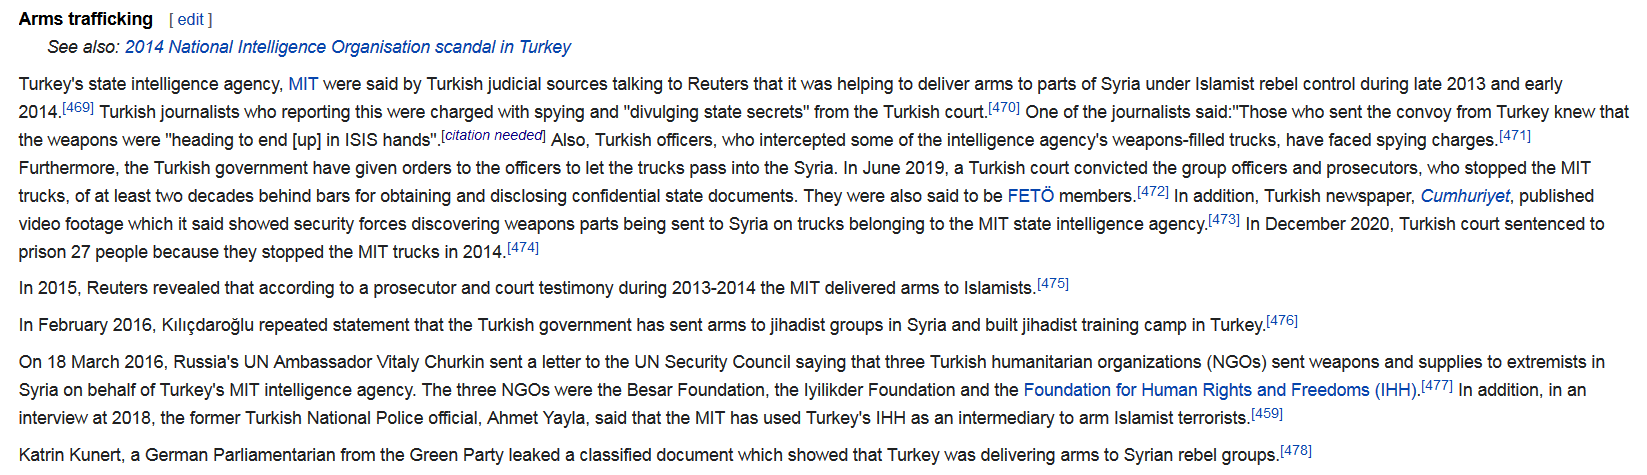 Screenshot_2021-11-11 Turkish involvement in the Syrian civil war - Wikipedia(1).png